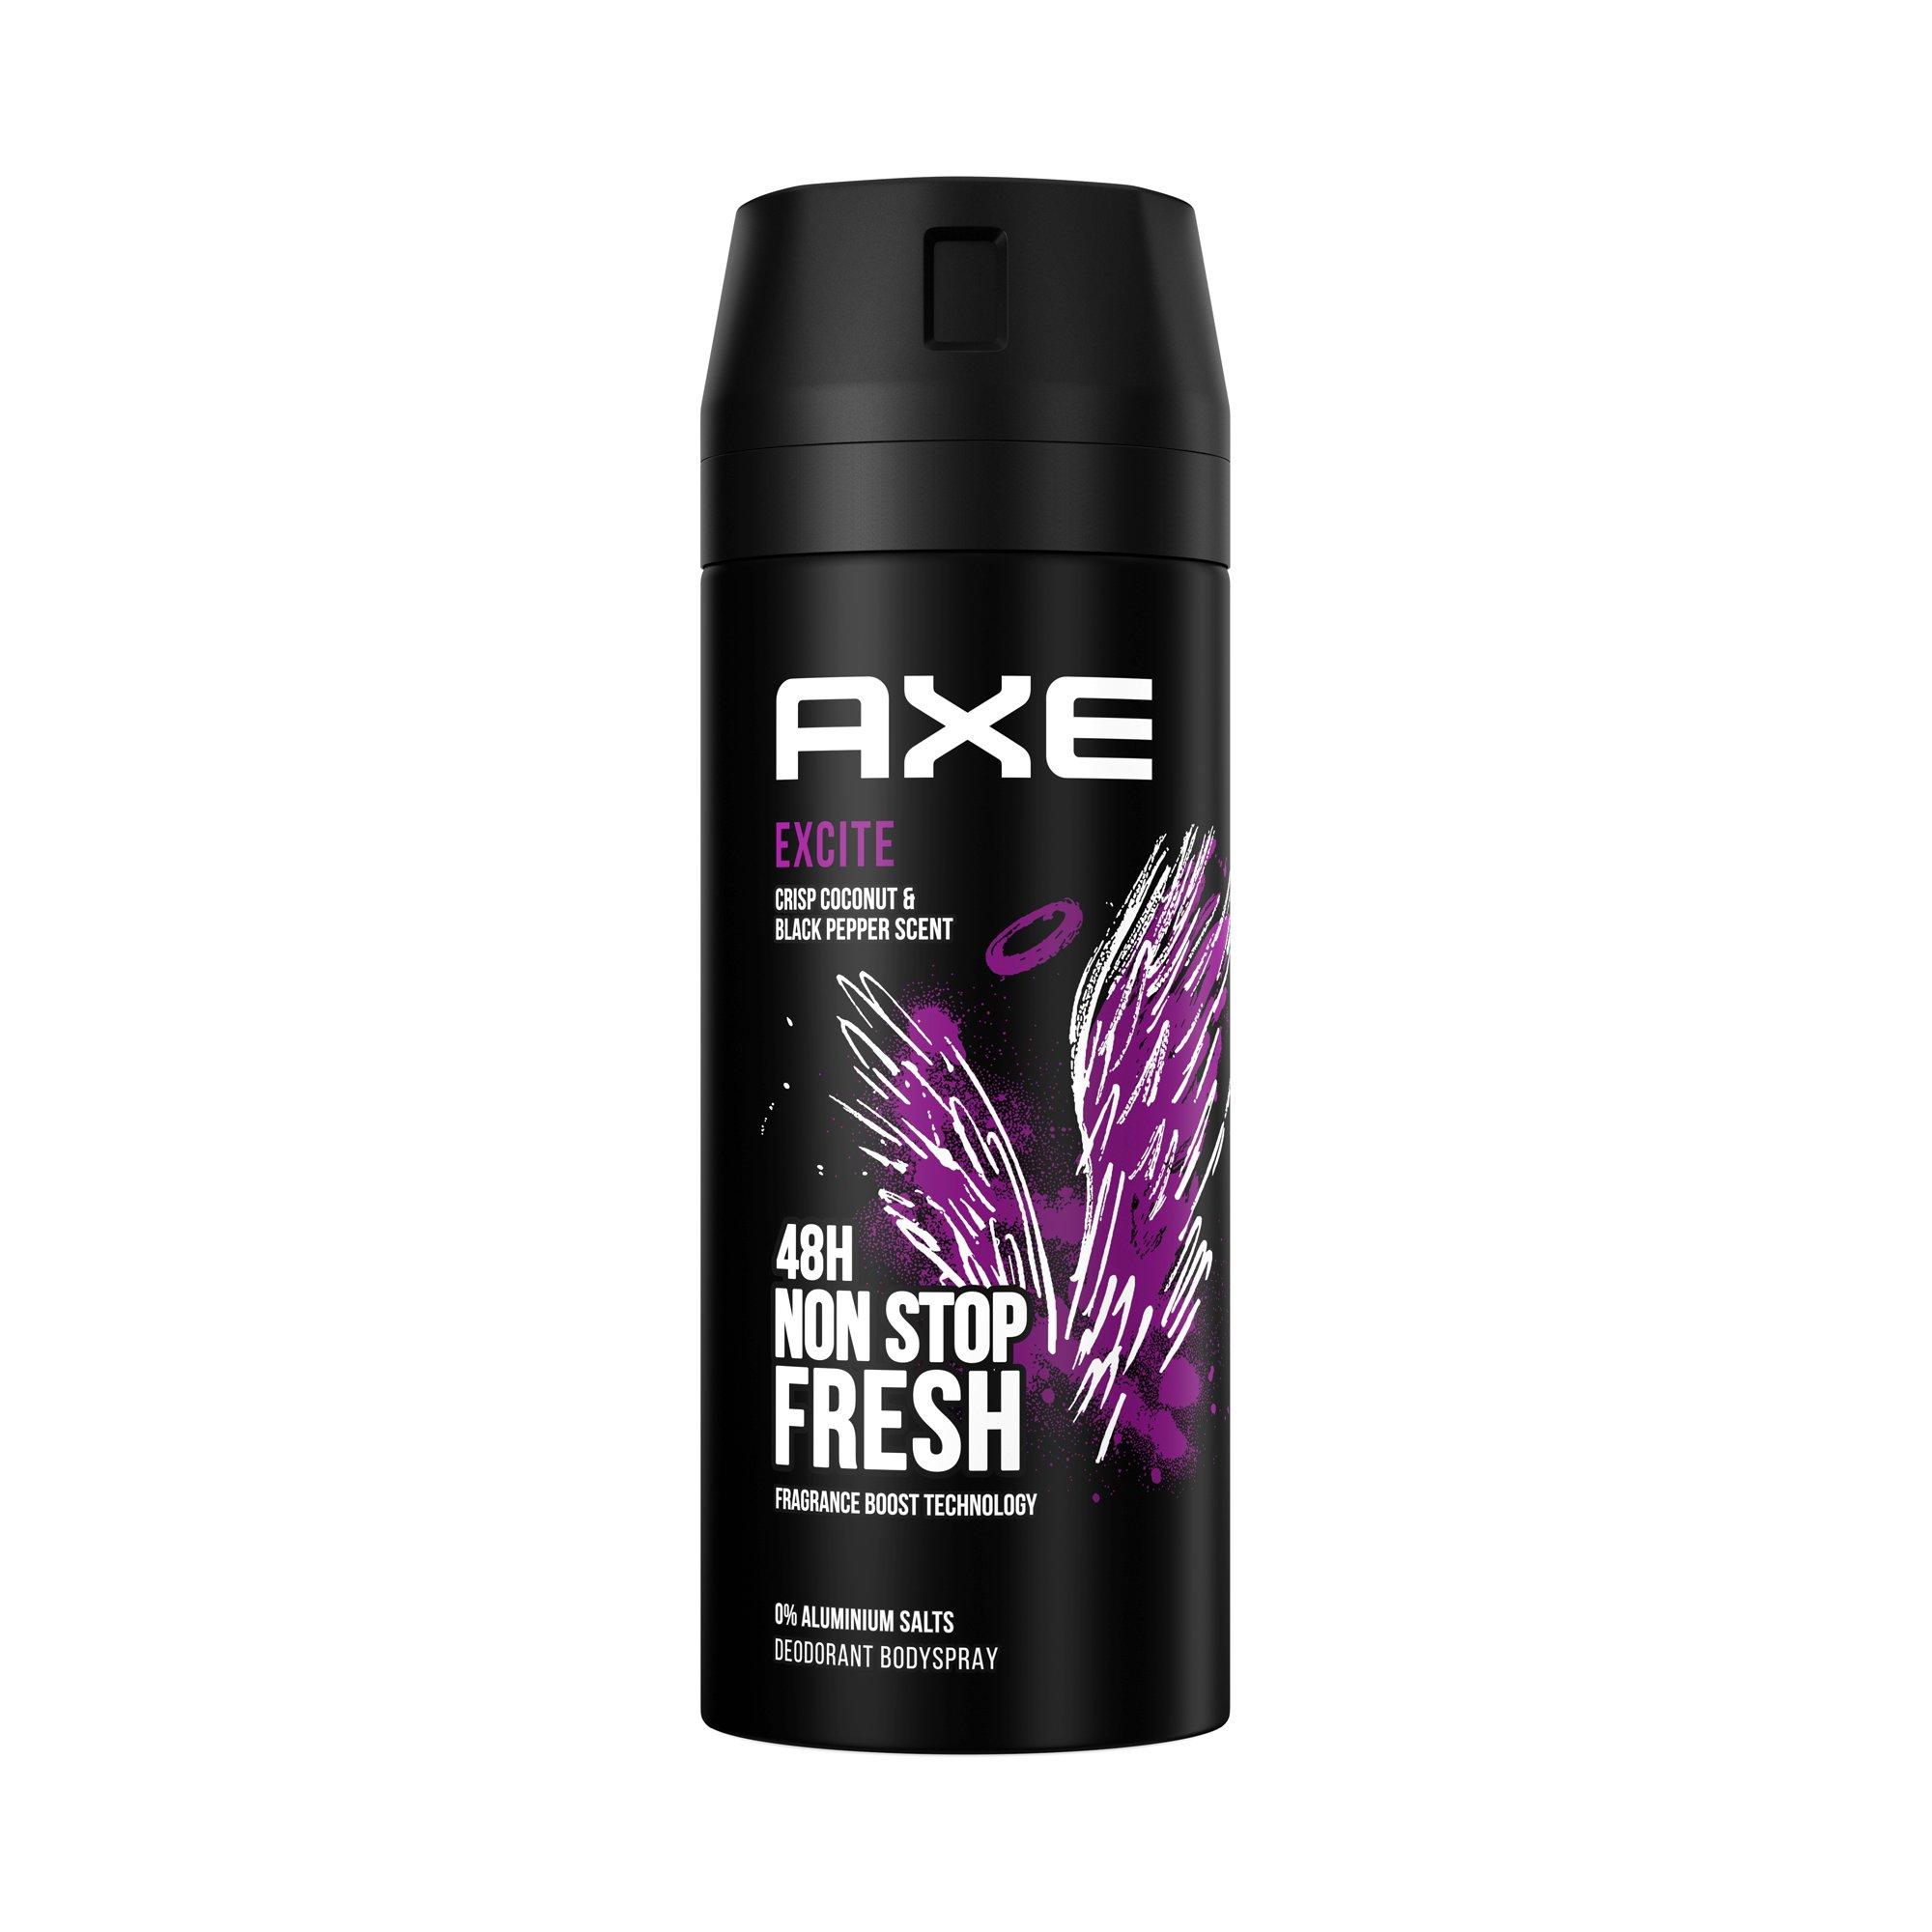 AXE Ecxite Bodyspray Excite Temptation sans sels d'aluminium 